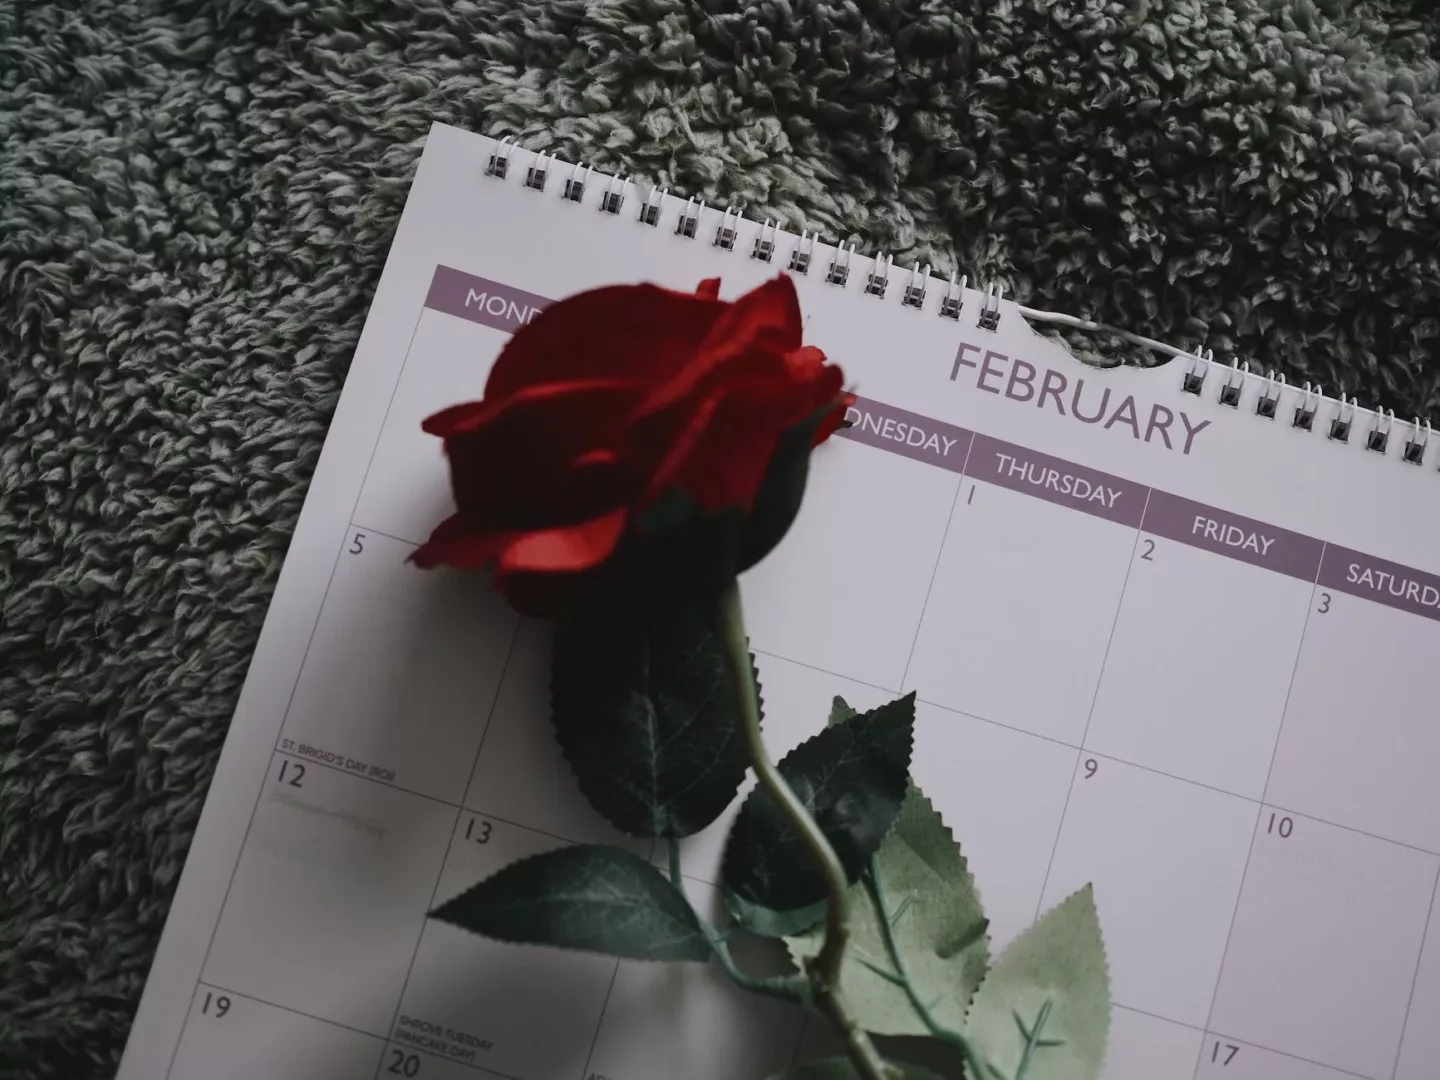 red rose on calendar